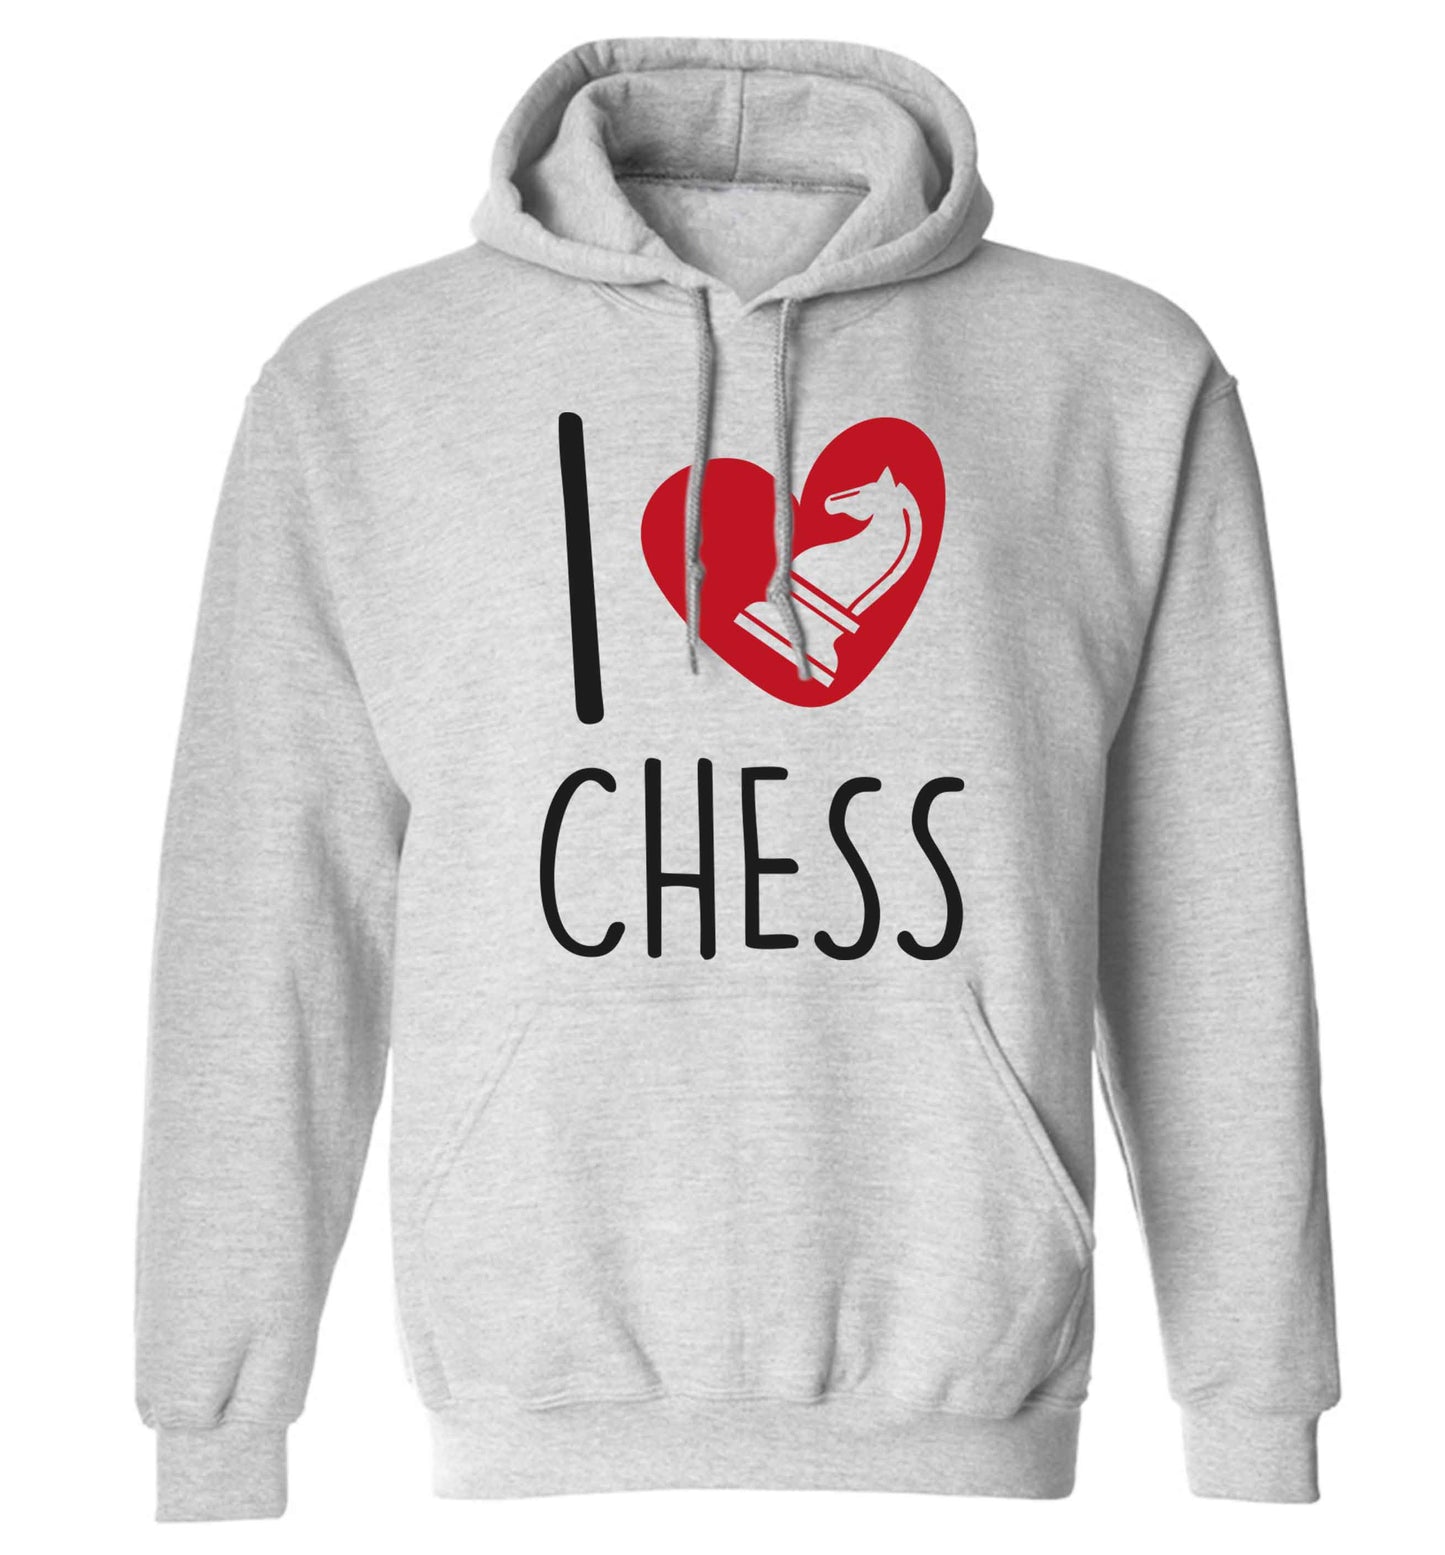 I love chess adults unisex grey hoodie 2XL